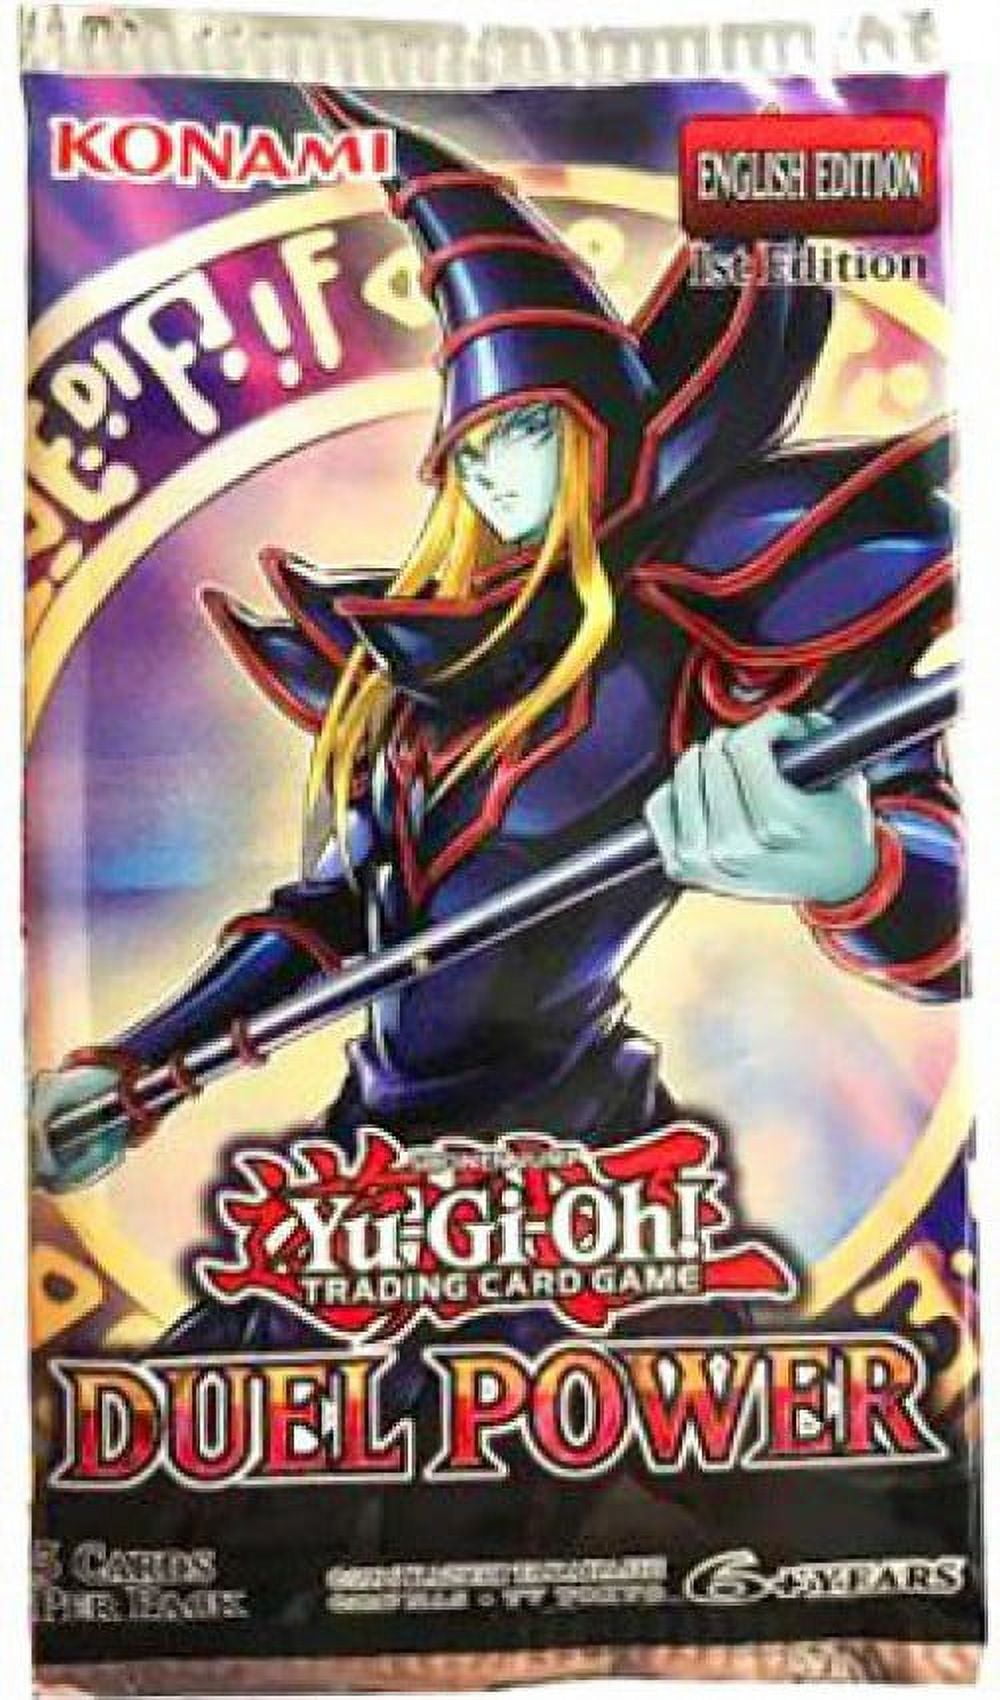 Yu-Gi-Oh! ZEXAL Duelist Pack 1 Box (30Packs) - YuGiOh Card Yuma2 Gogogo &  DODODO (Korean Version)